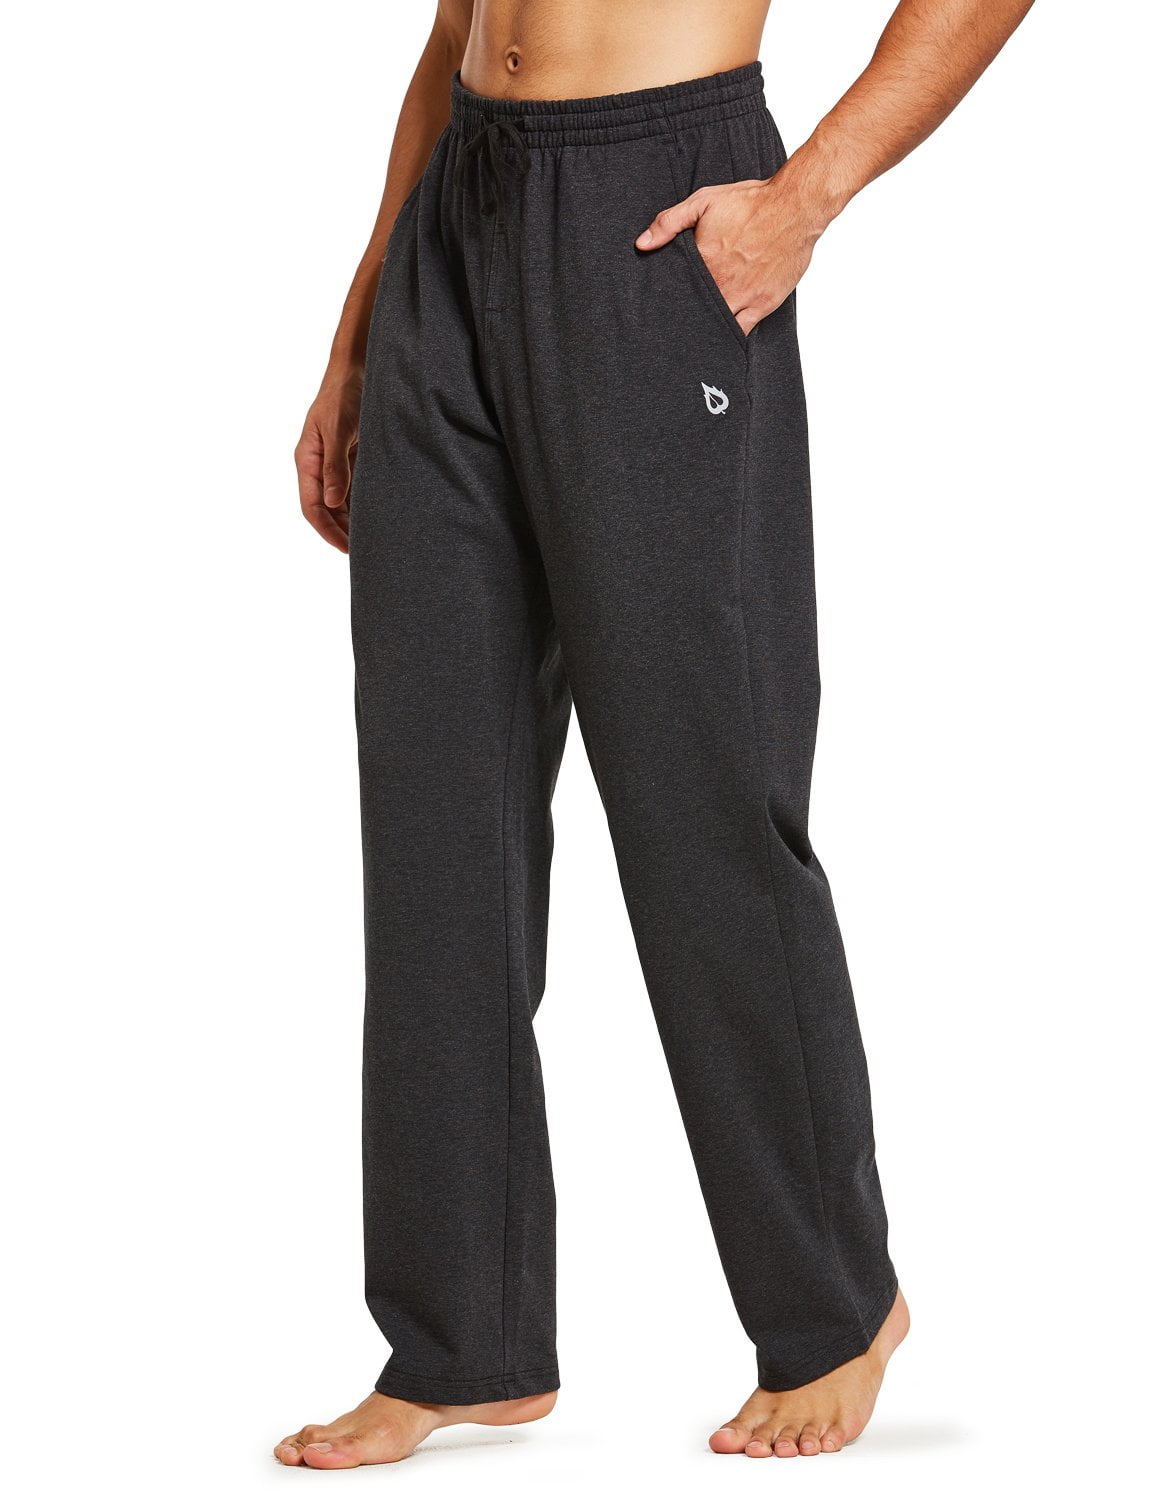 BALEAF Men's Sweatpants Casual Lounge Cotton Yoga Pants Loose Open Bottom Straight Leg Male Sweat Pants with Pockets 